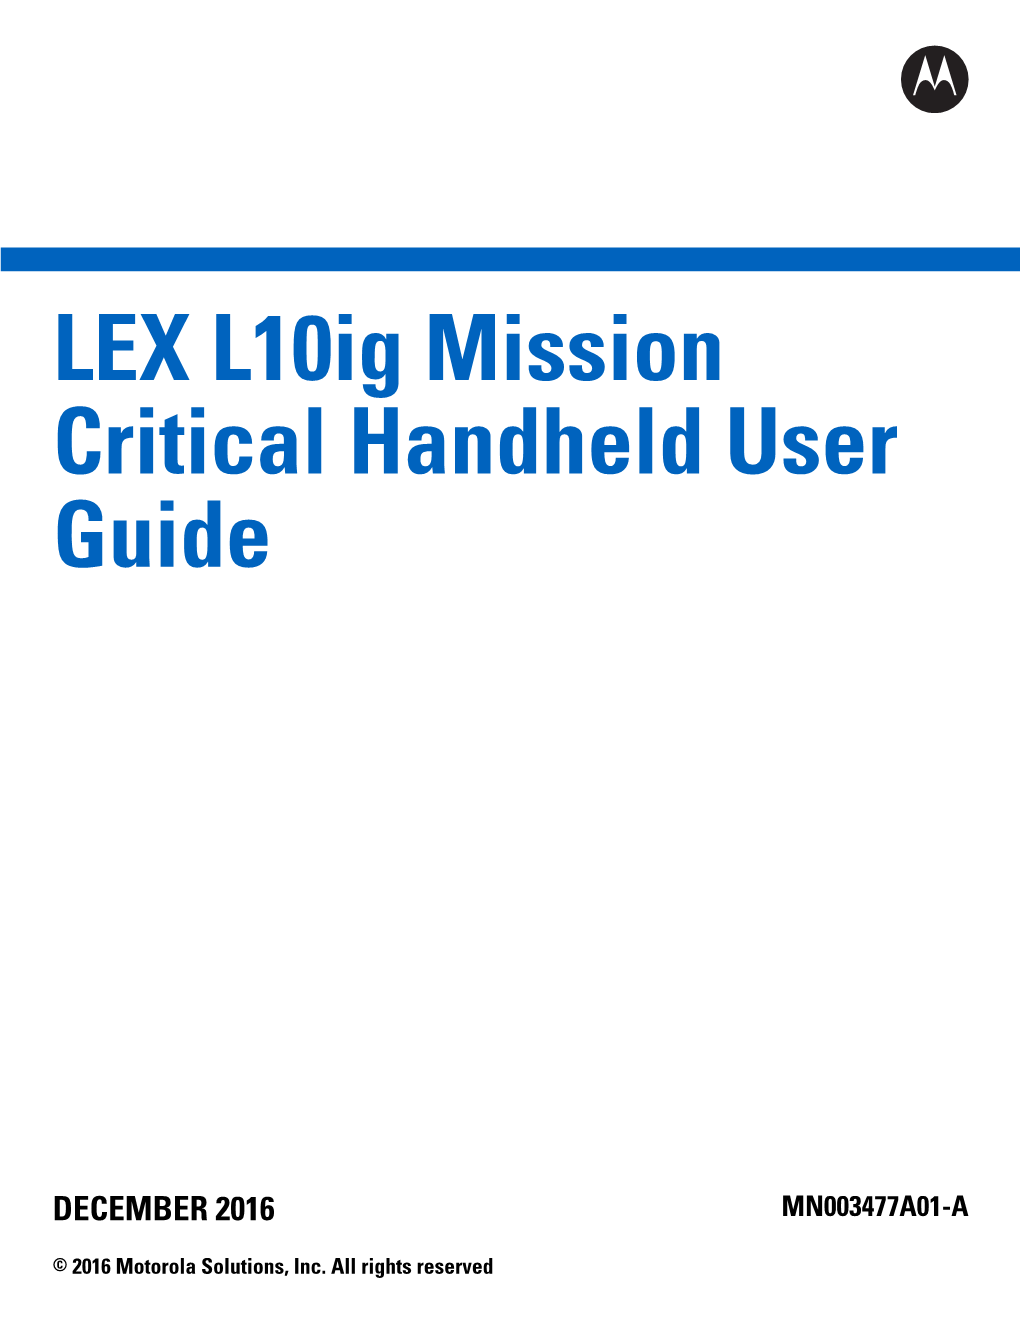 LEX L10ig Mission Critical Handheld User Guide